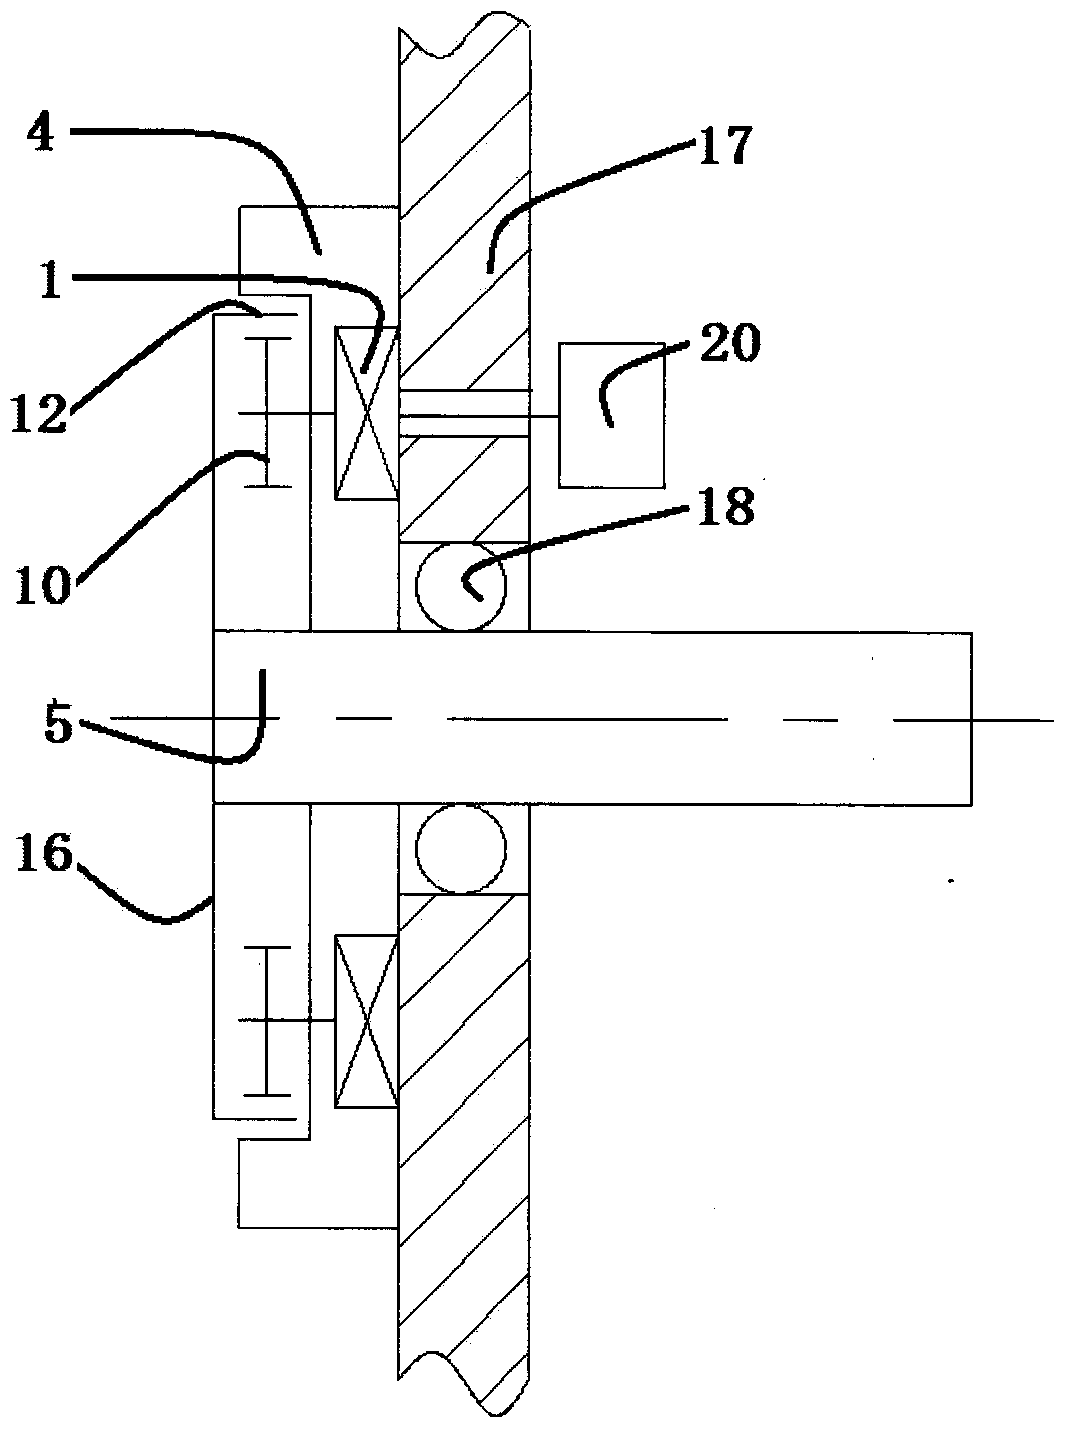 Elastic mechanism used for suspension